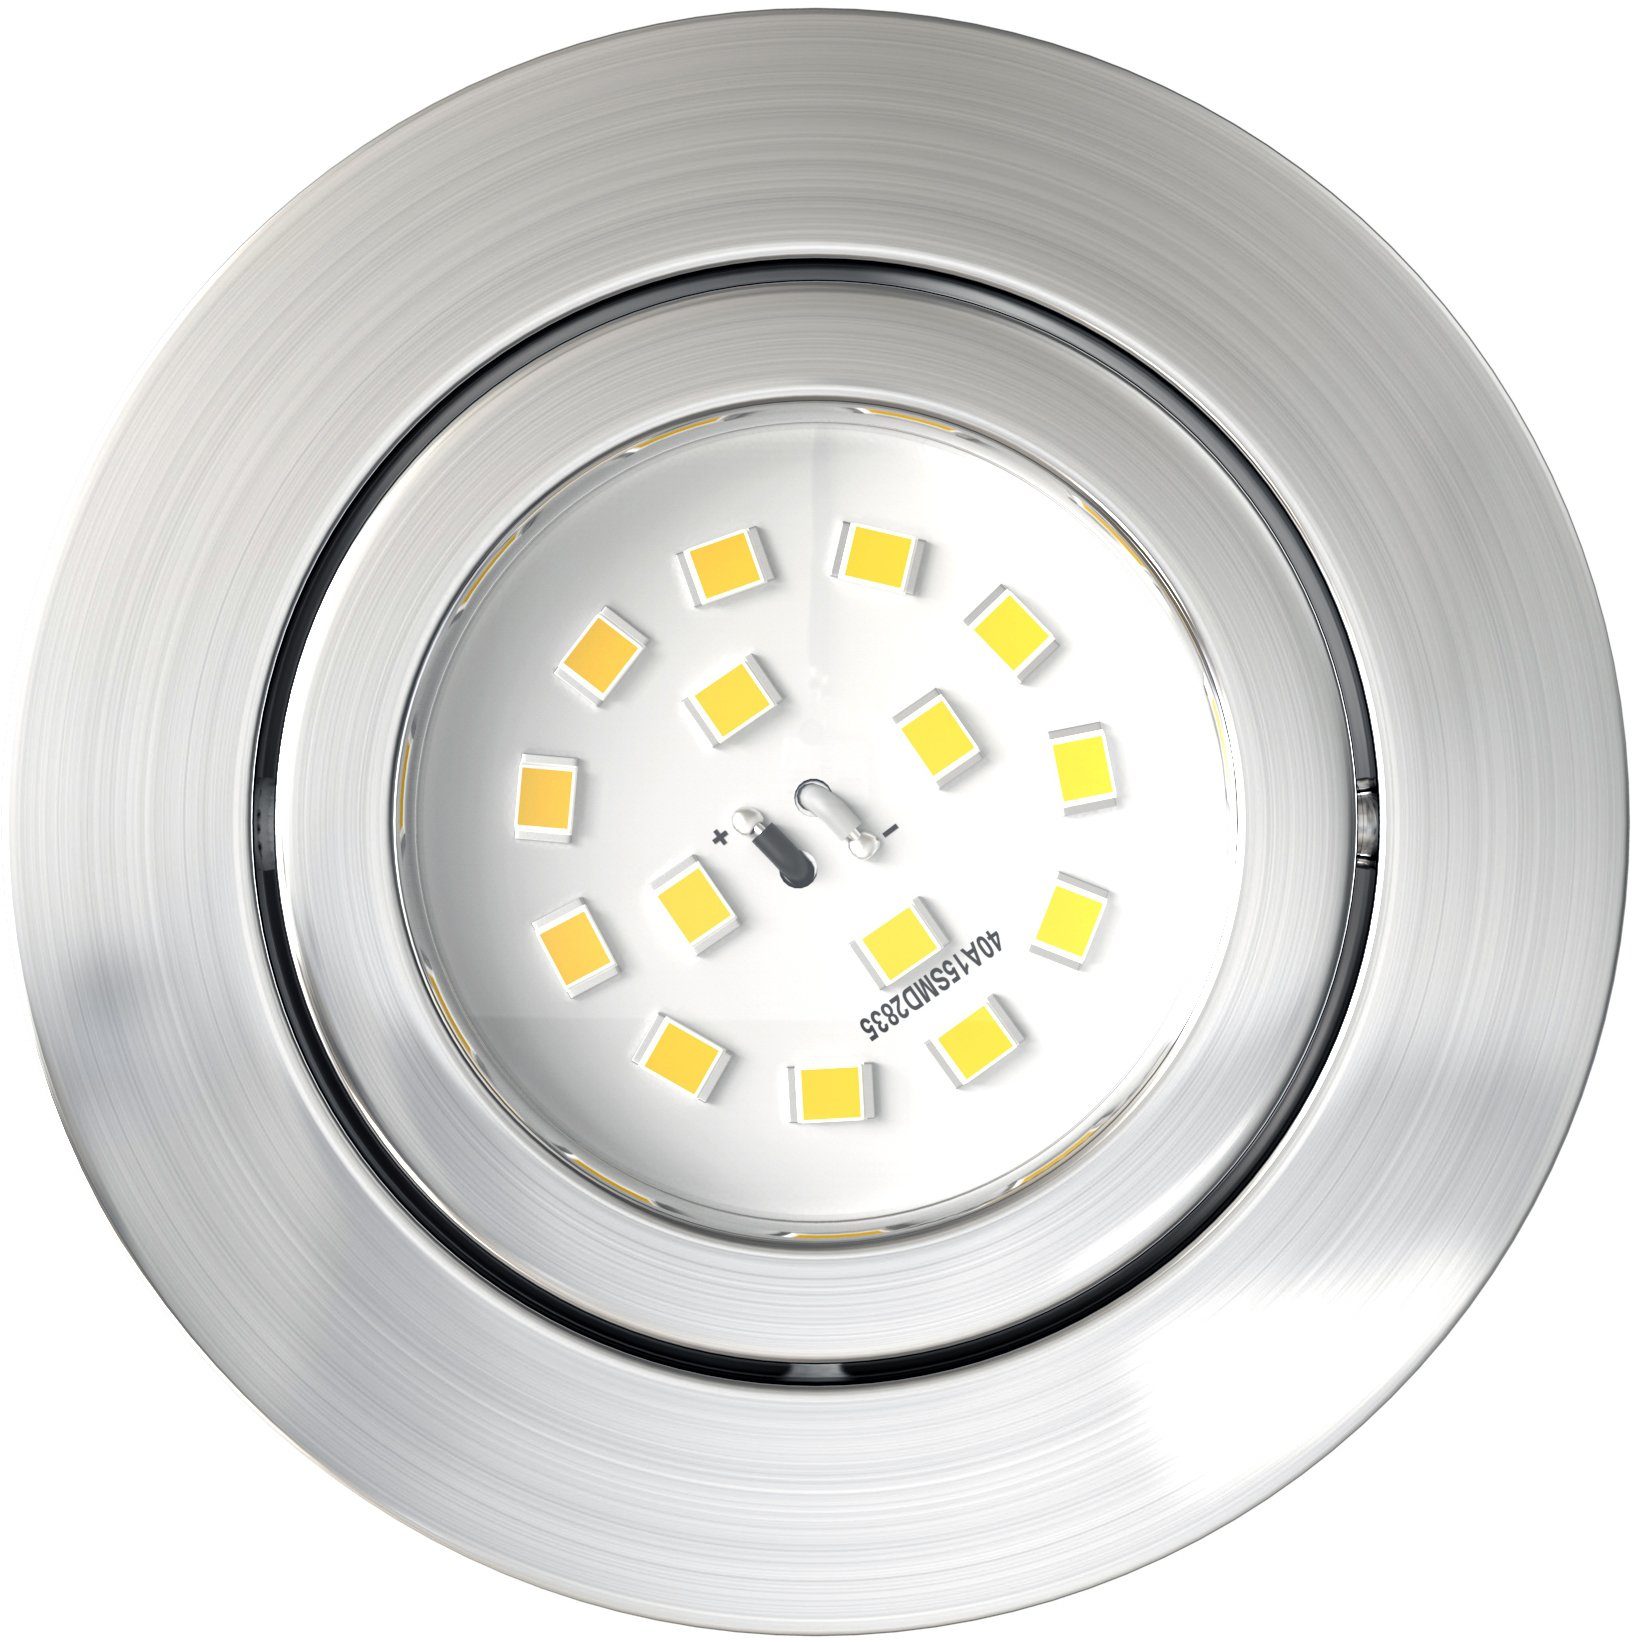 schwenkbar LED Einbauleuchte, Wandschalter, Warmweiß, 3-stufig, LED fest LED dimmbar, B.K.Licht Einbaustrahler, integriert,